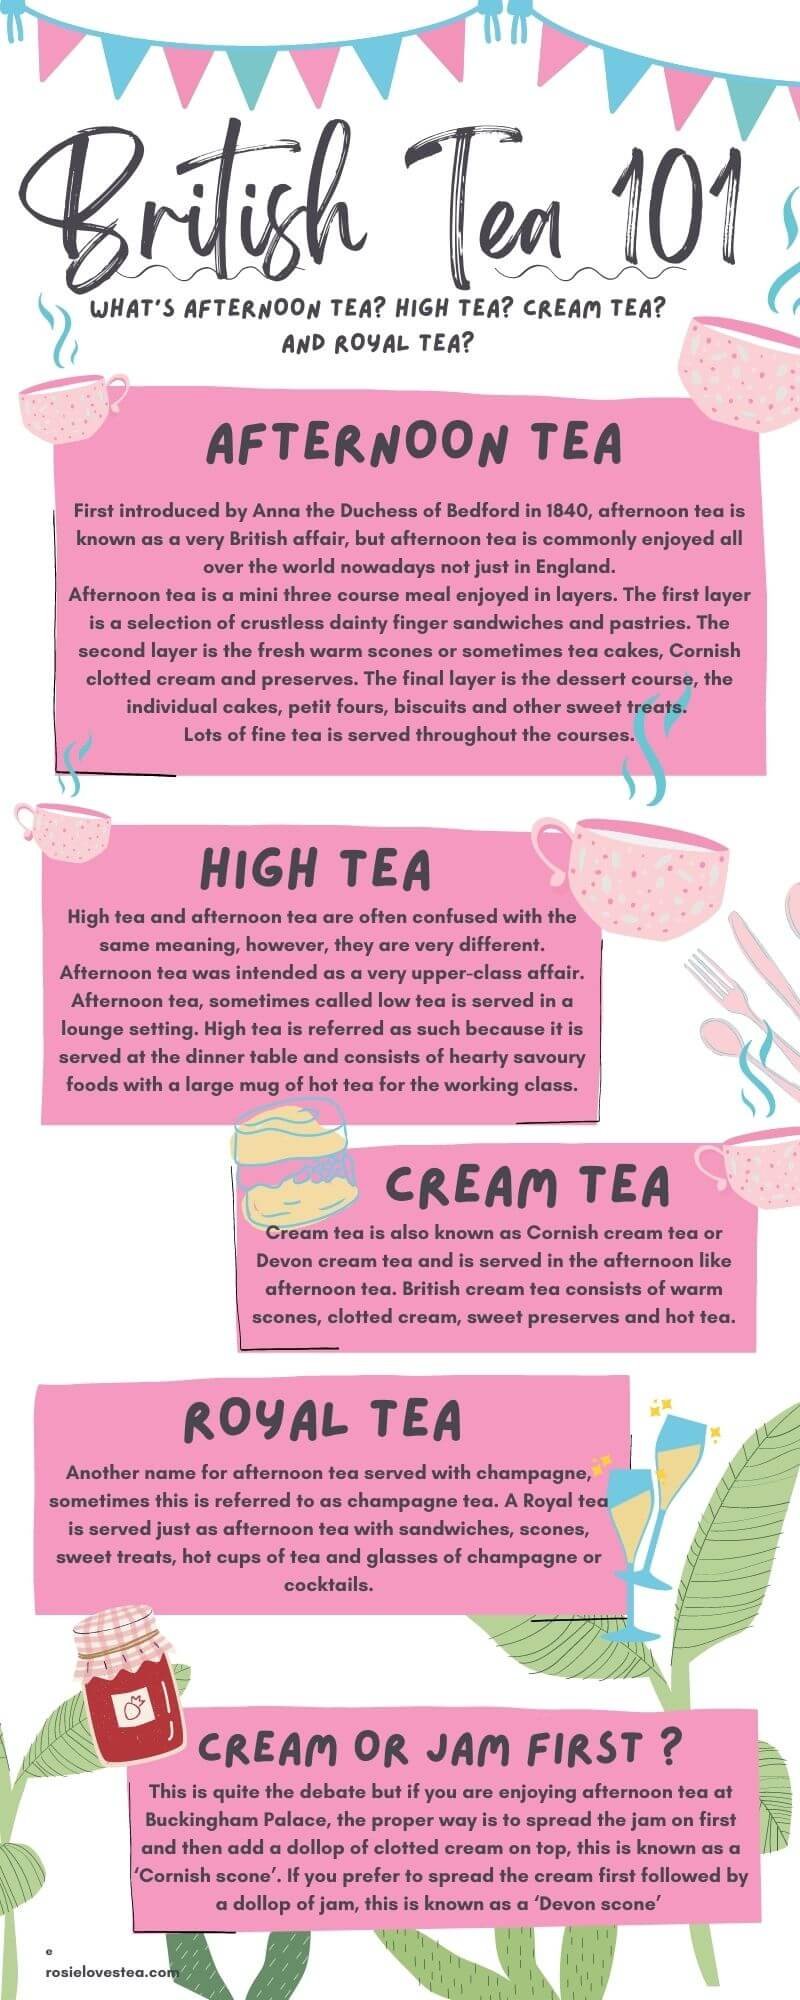 Is Afternoon Tea the Same as High Tea?